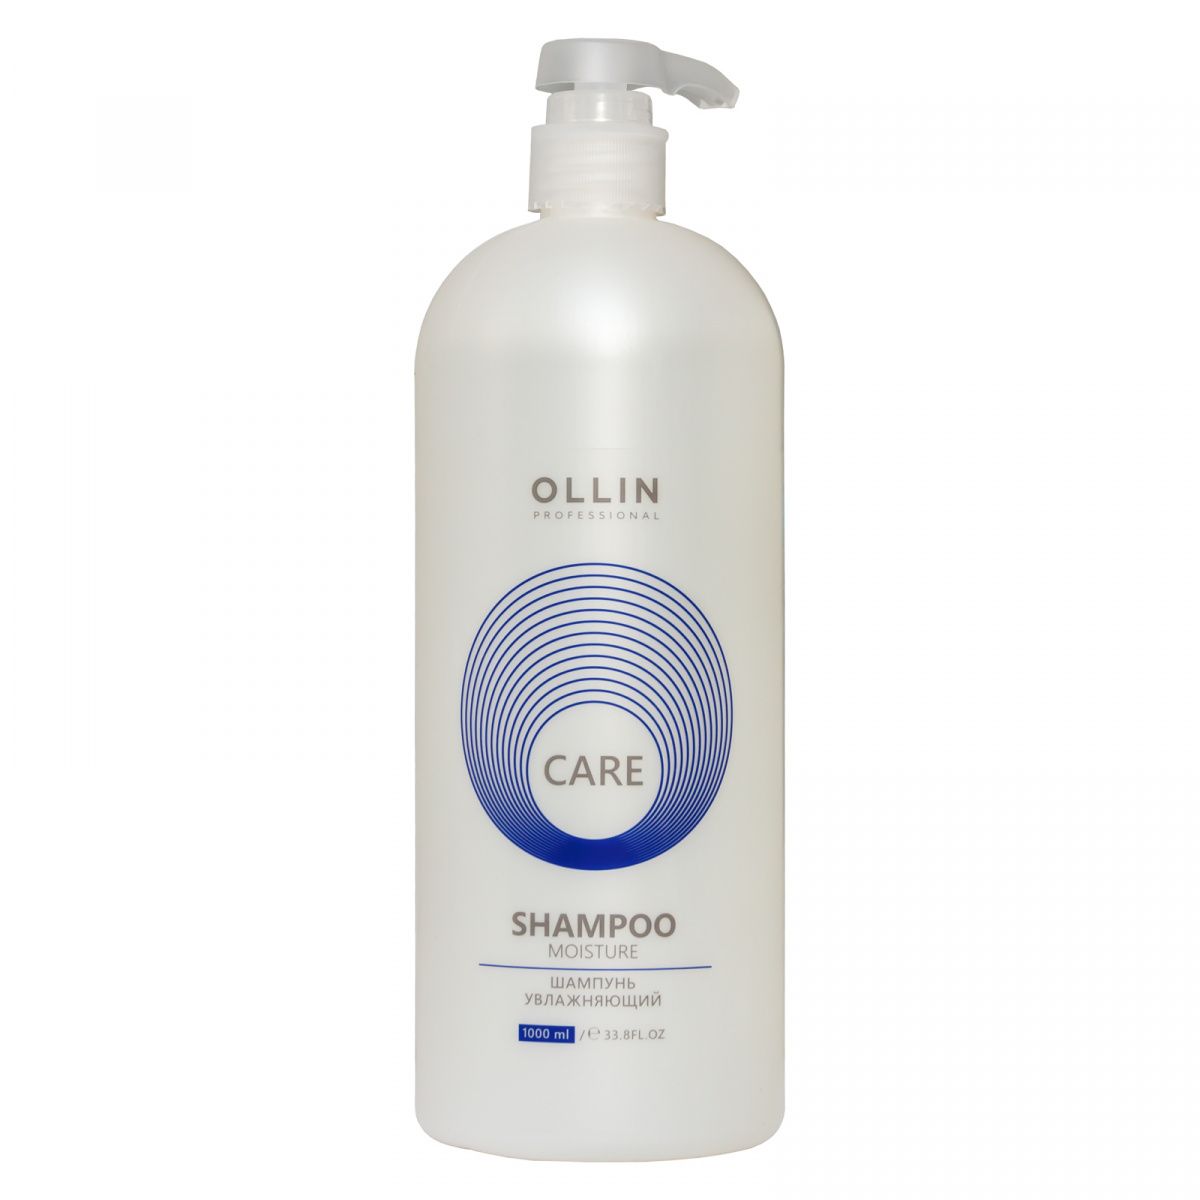 Ollin Care Moisture Shampoo 38176